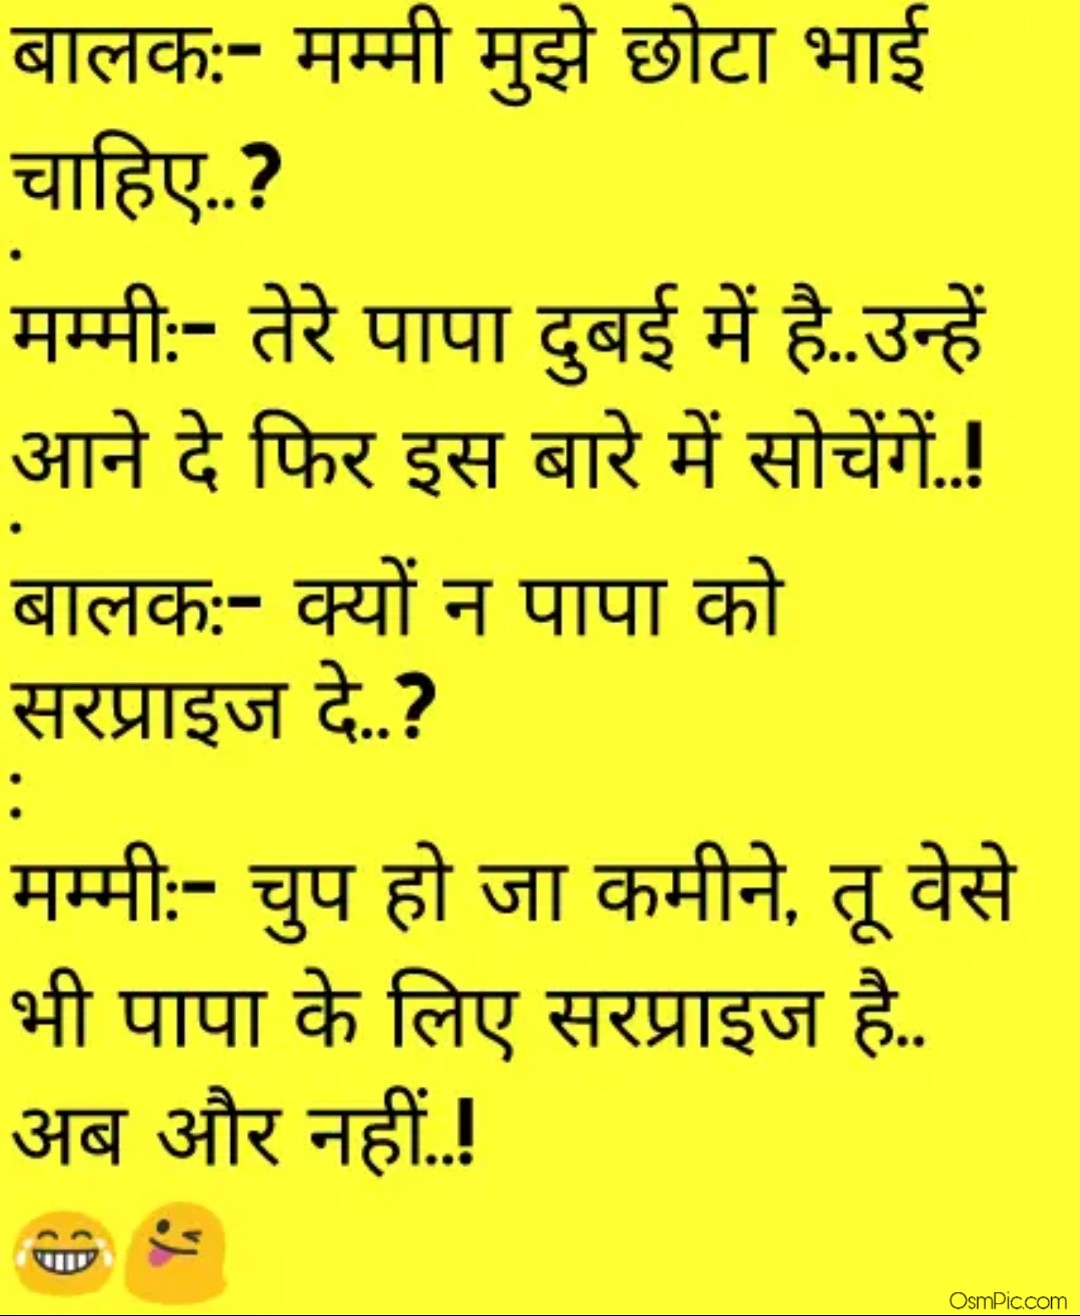 Very Funny Non Veg Hindi Jokes Images Photos For Whatsapp In Hindi.